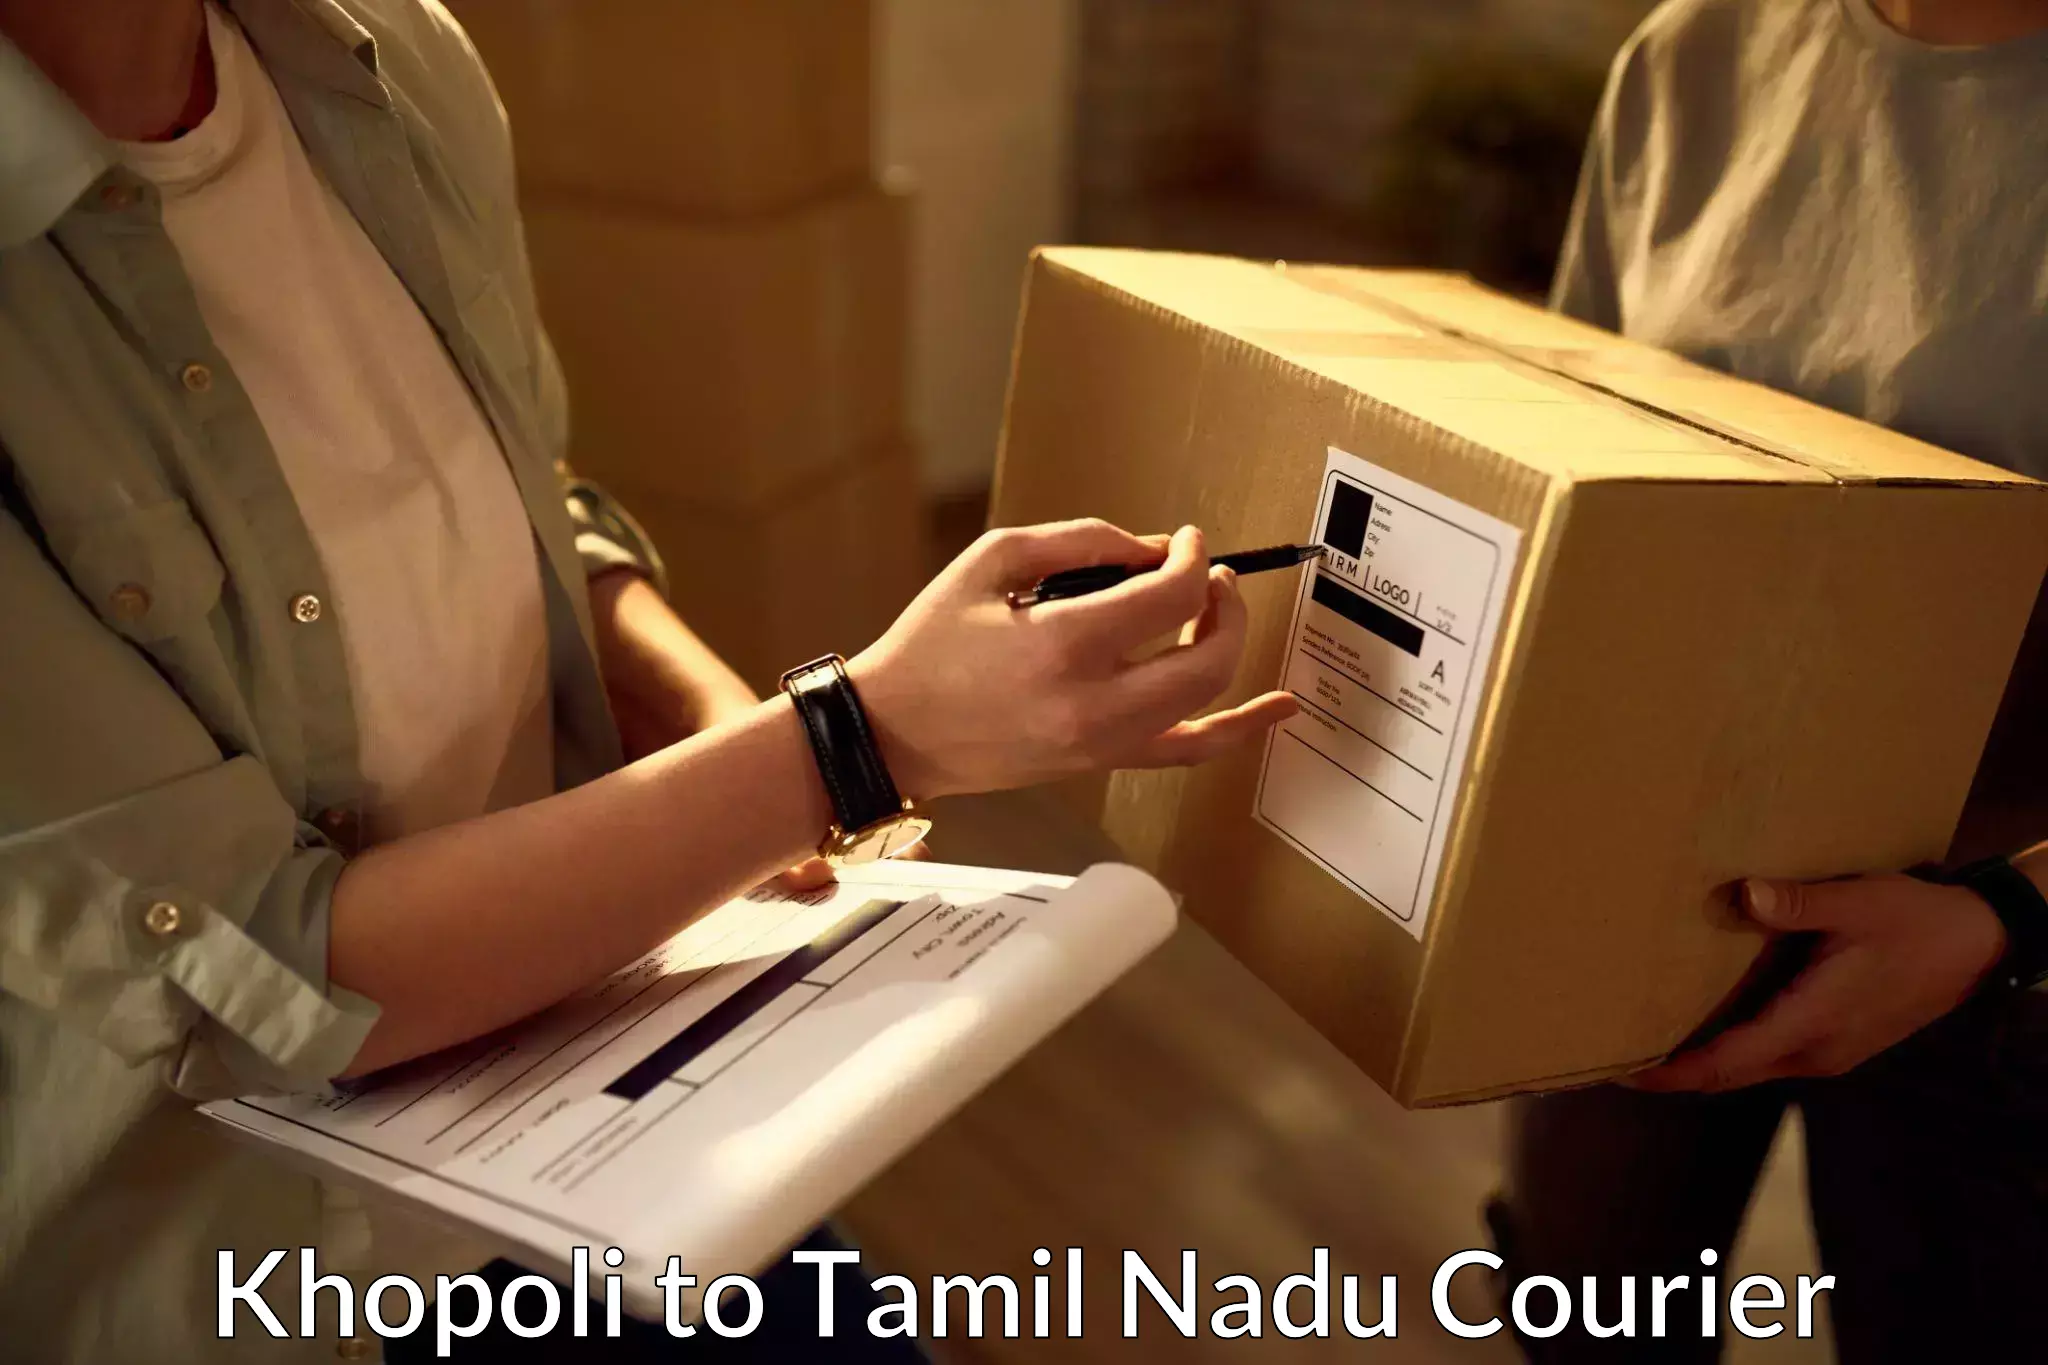 Next-day delivery options Khopoli to Madurai